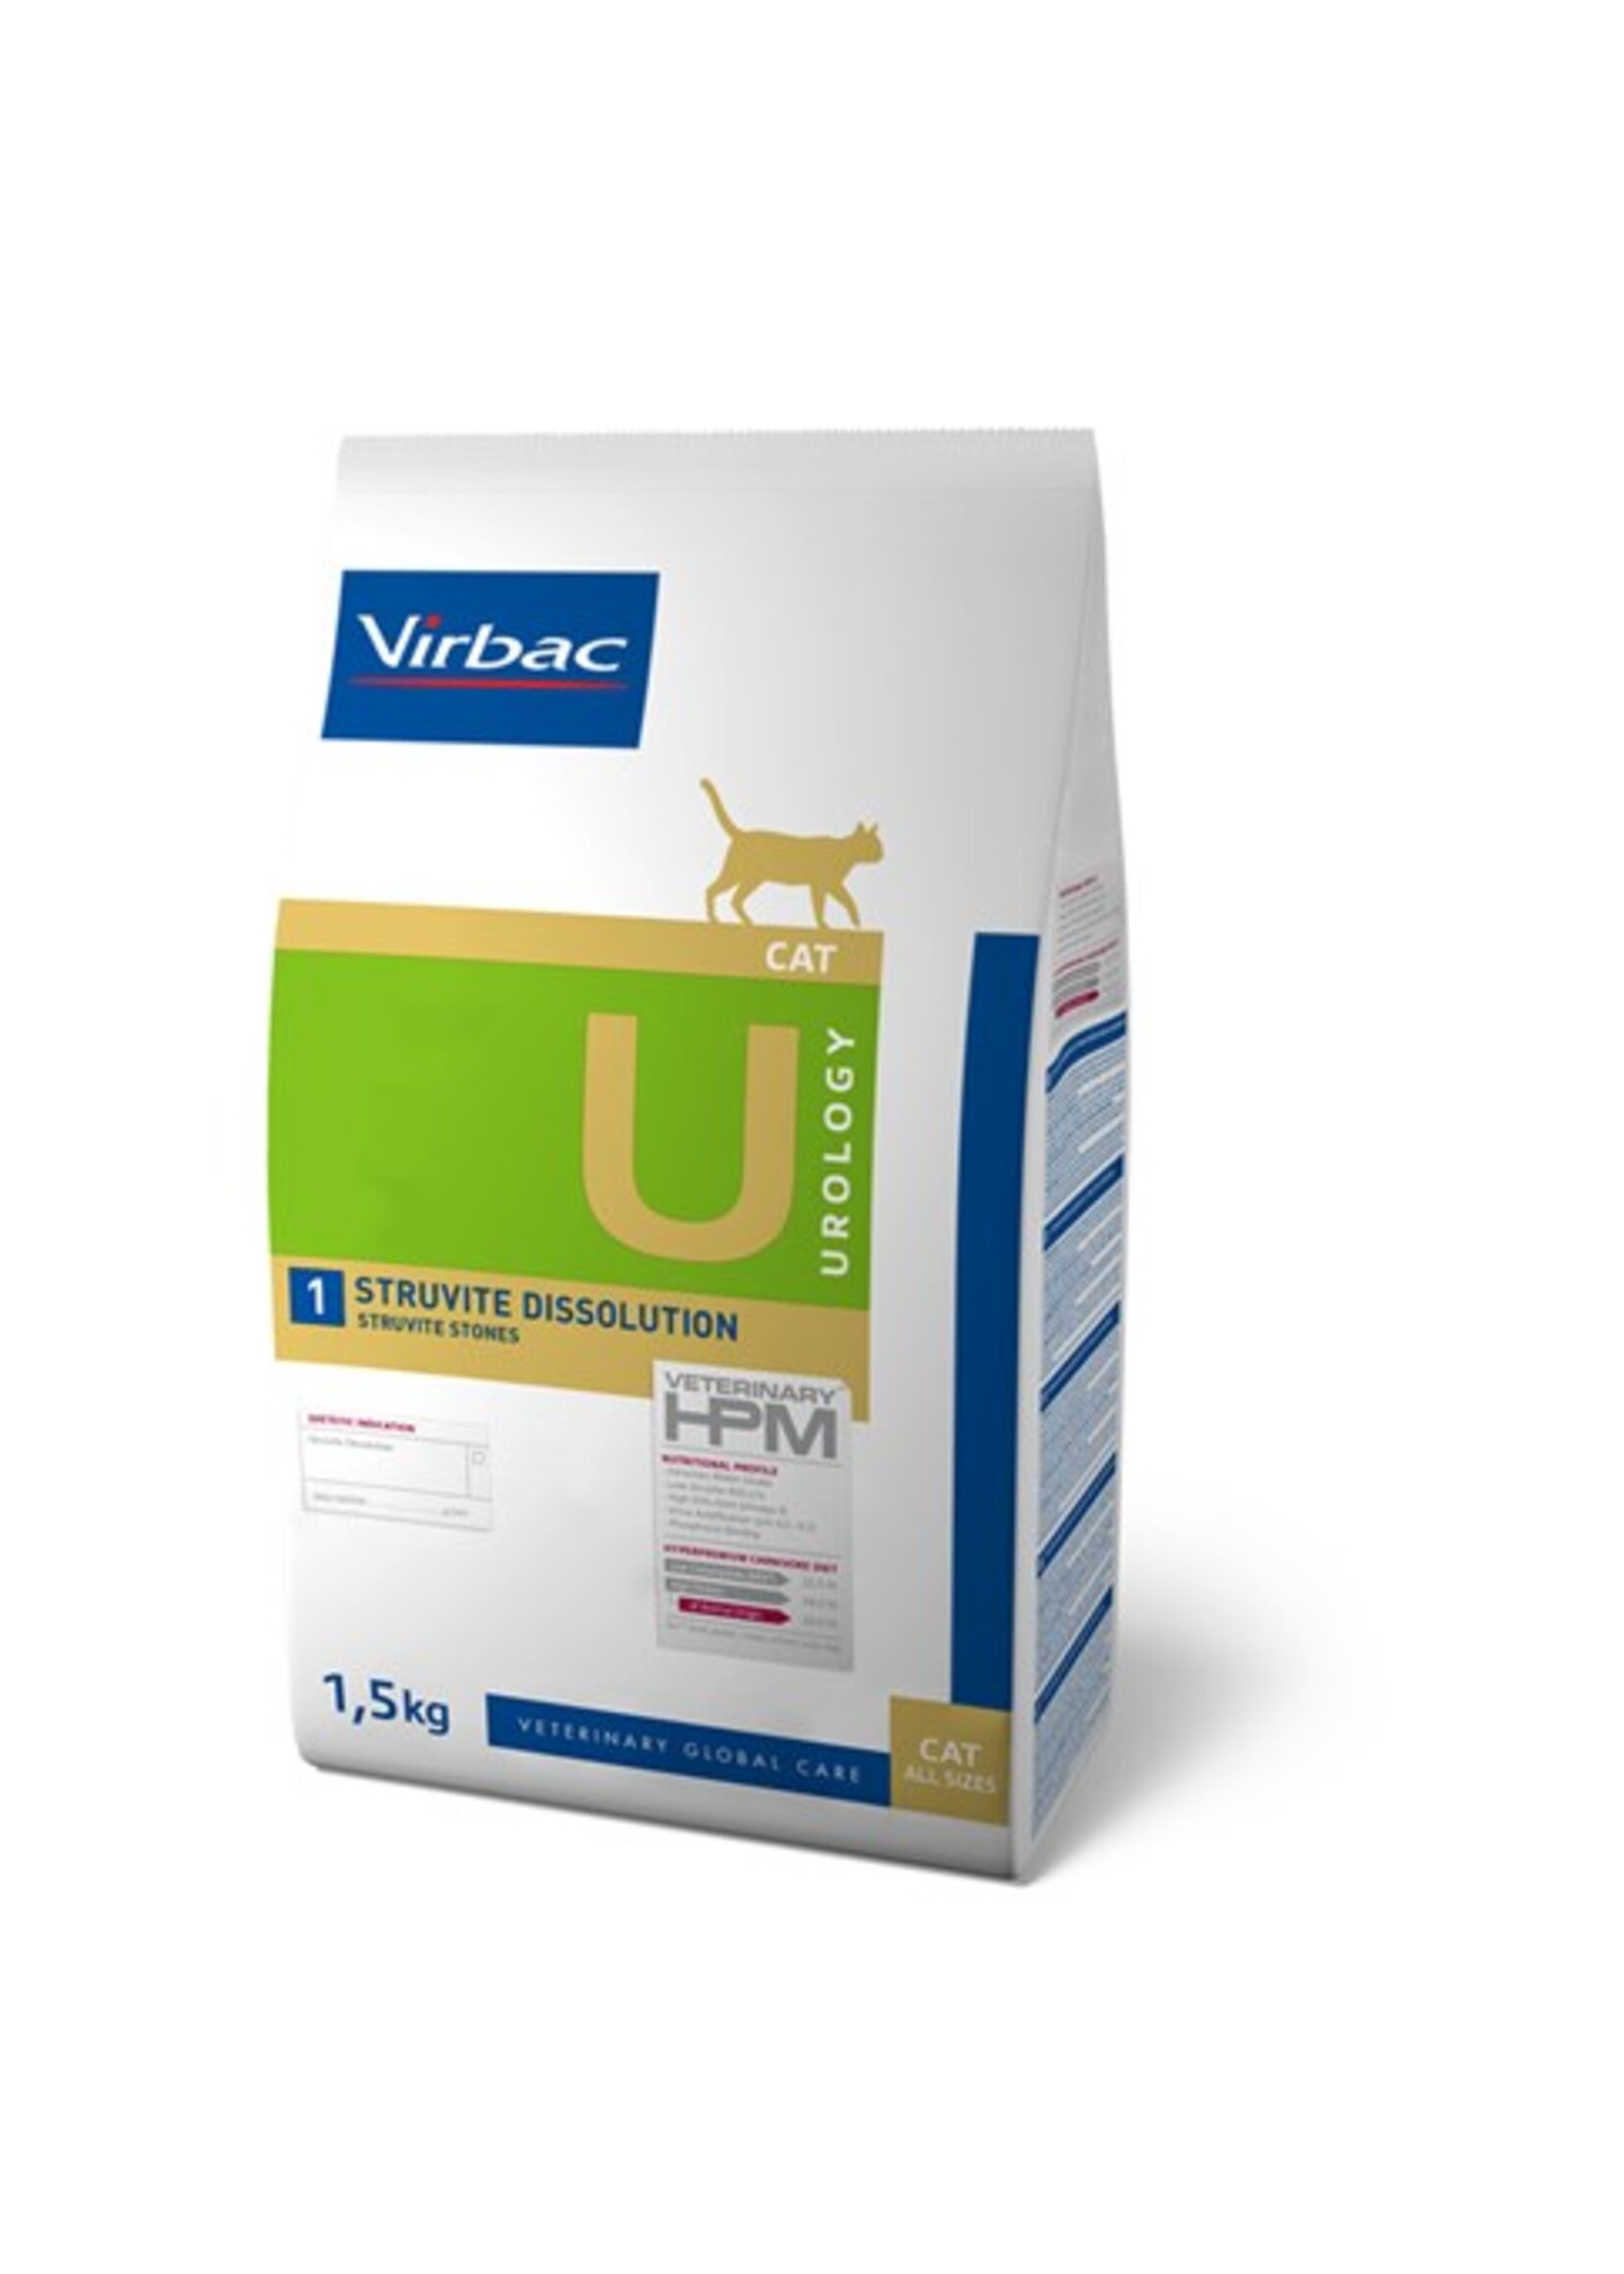 Virbac Virbac Hpm Kat Urology Struvite Dissolution U1 1,5kg